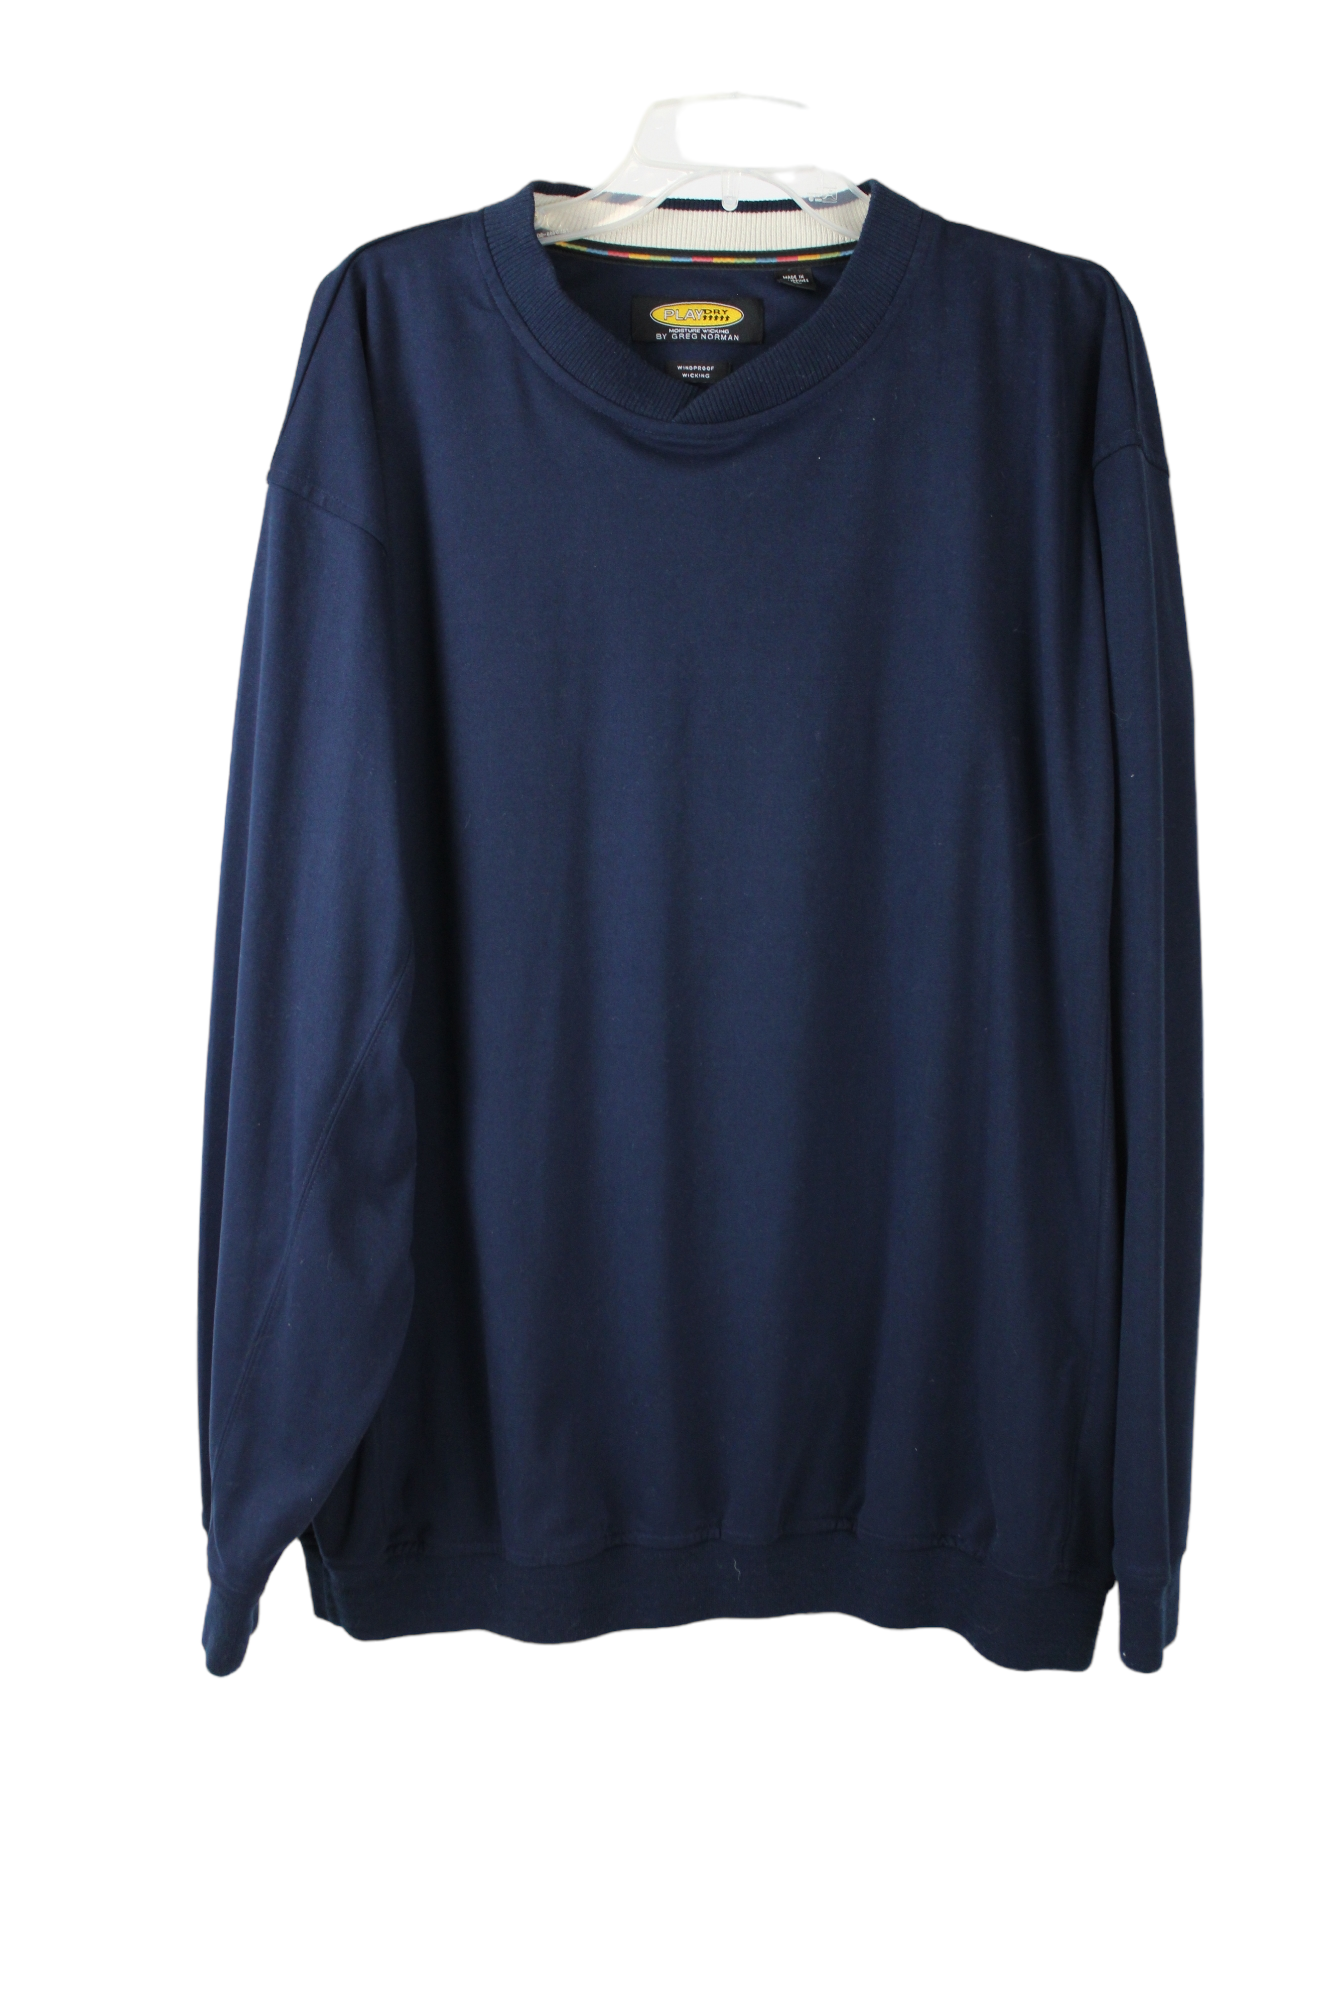 Greg Norman PlayDry Navy Blue Windproof Wicking Shirt | XL